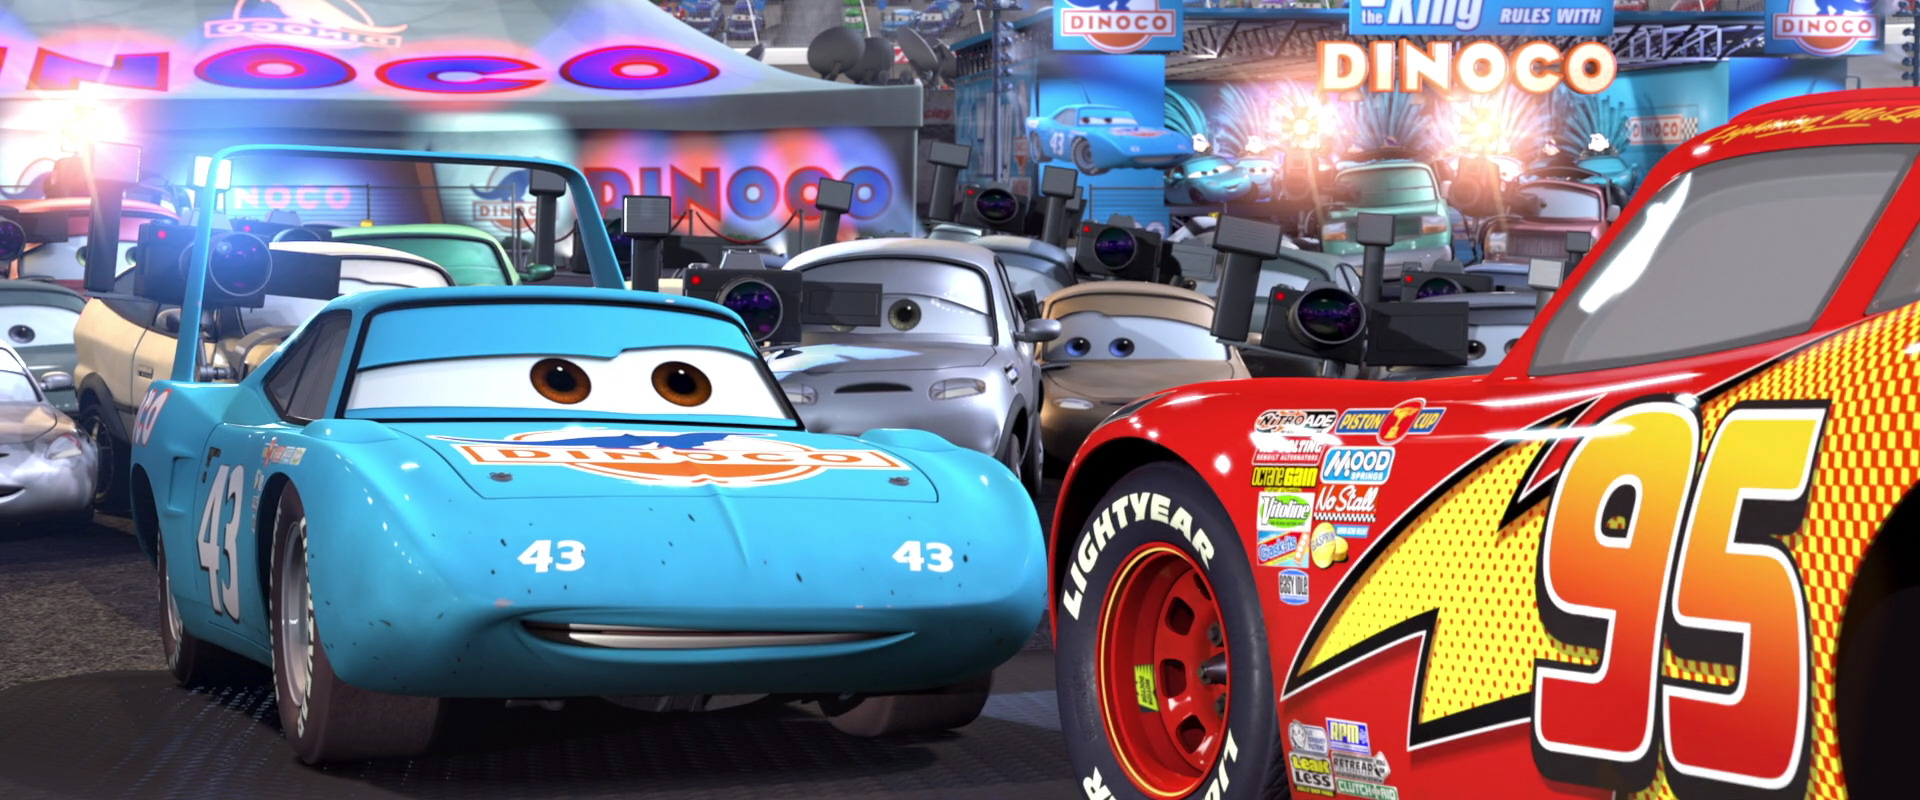 Image - Cars-disneyscreencaps.com-1252.jpg | Pixar Wiki | FANDOM